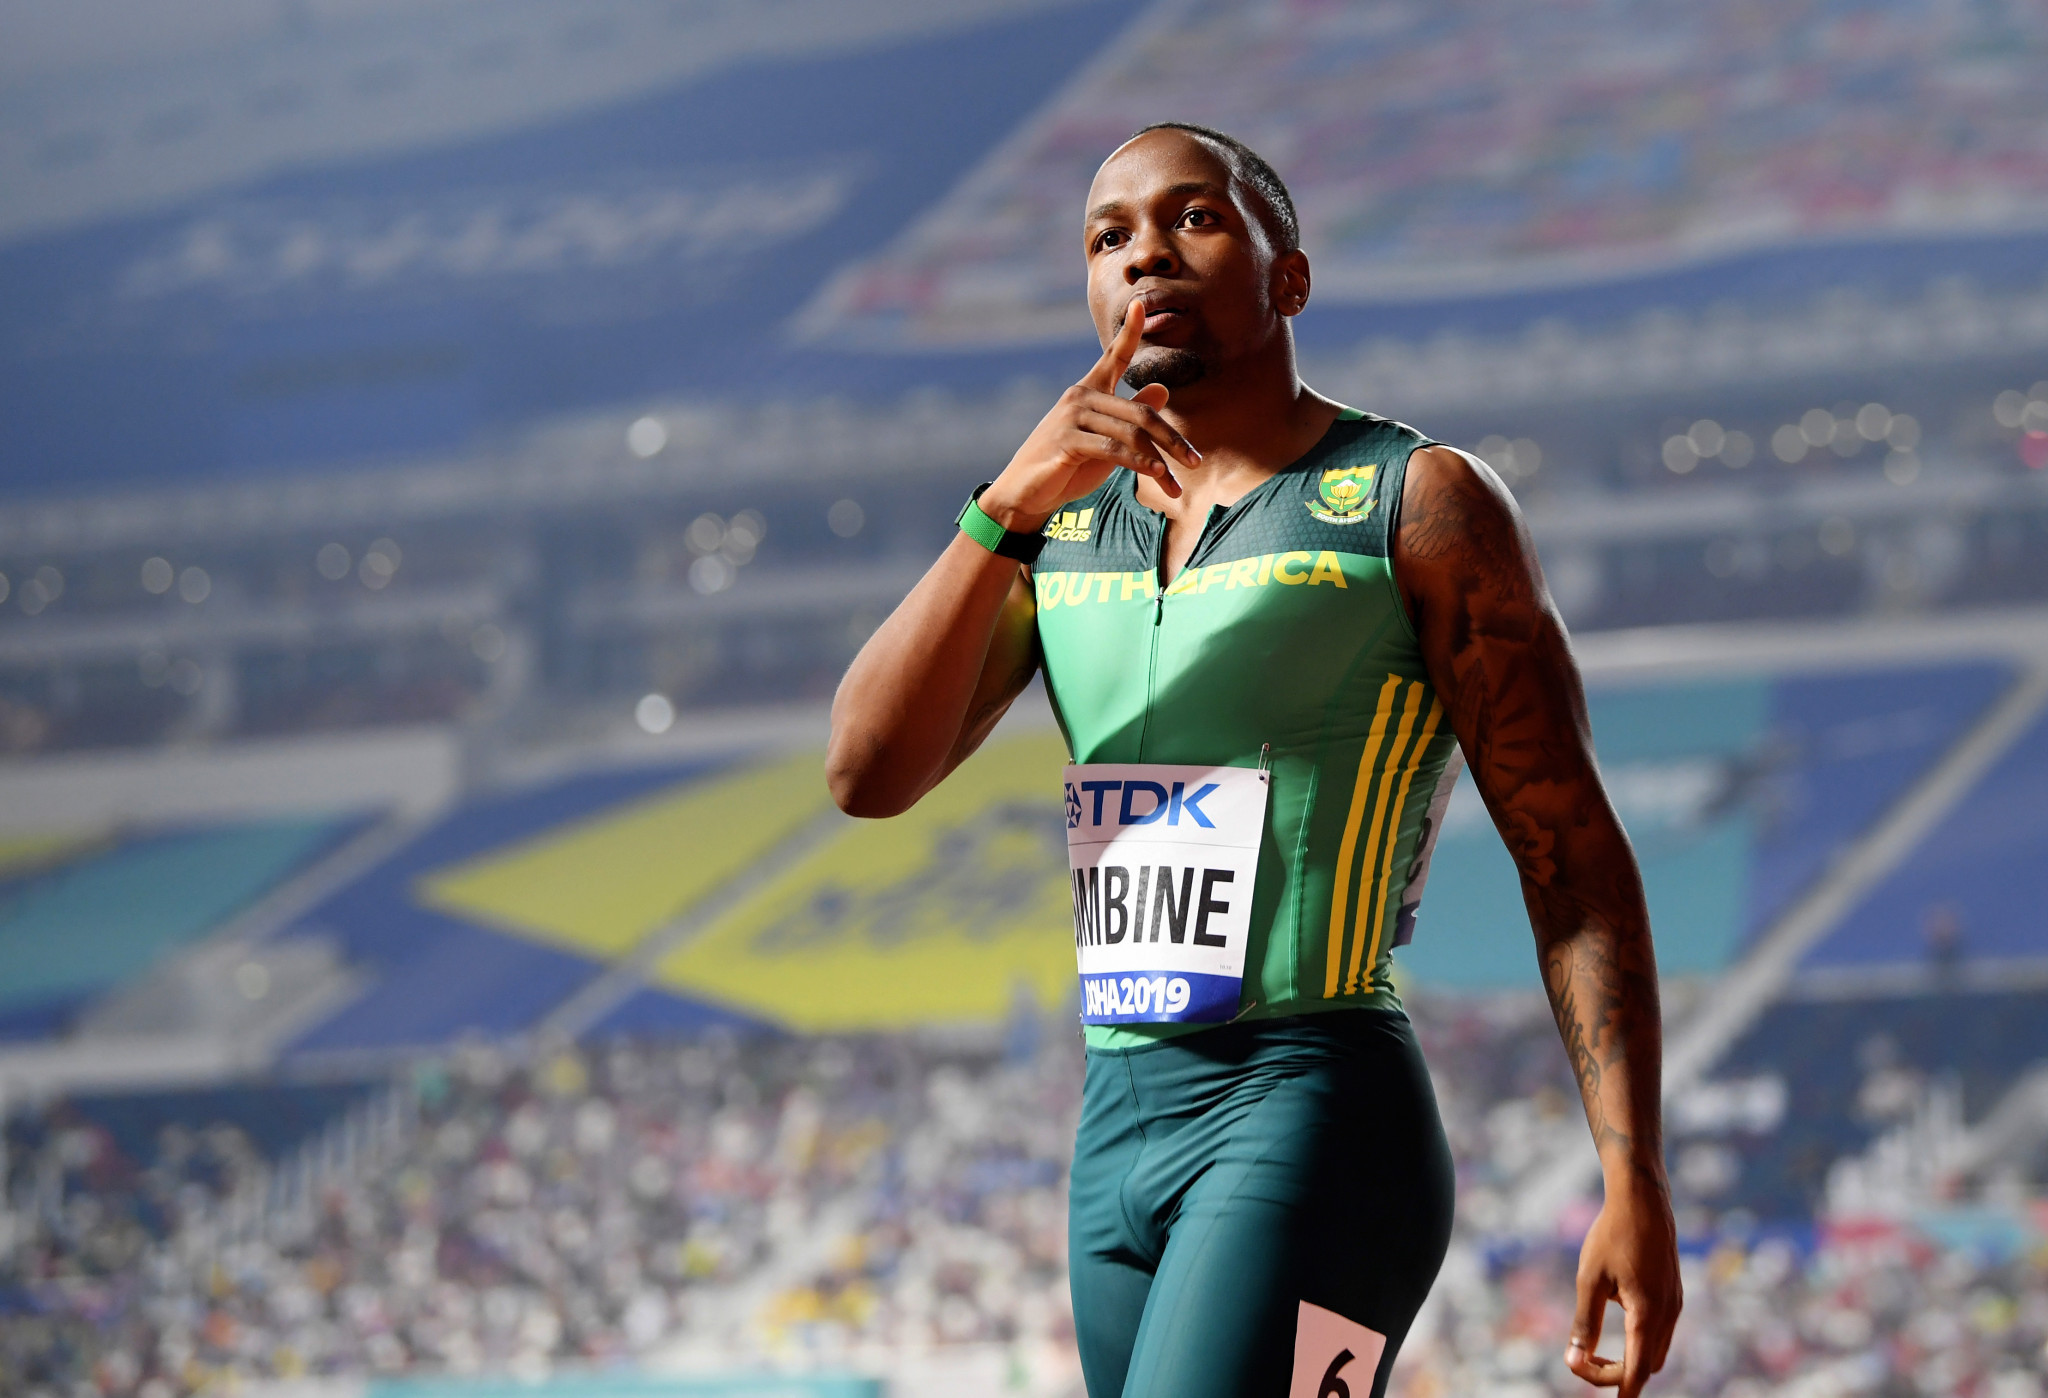 Simbine clocks men's 100m world lead in South Africa